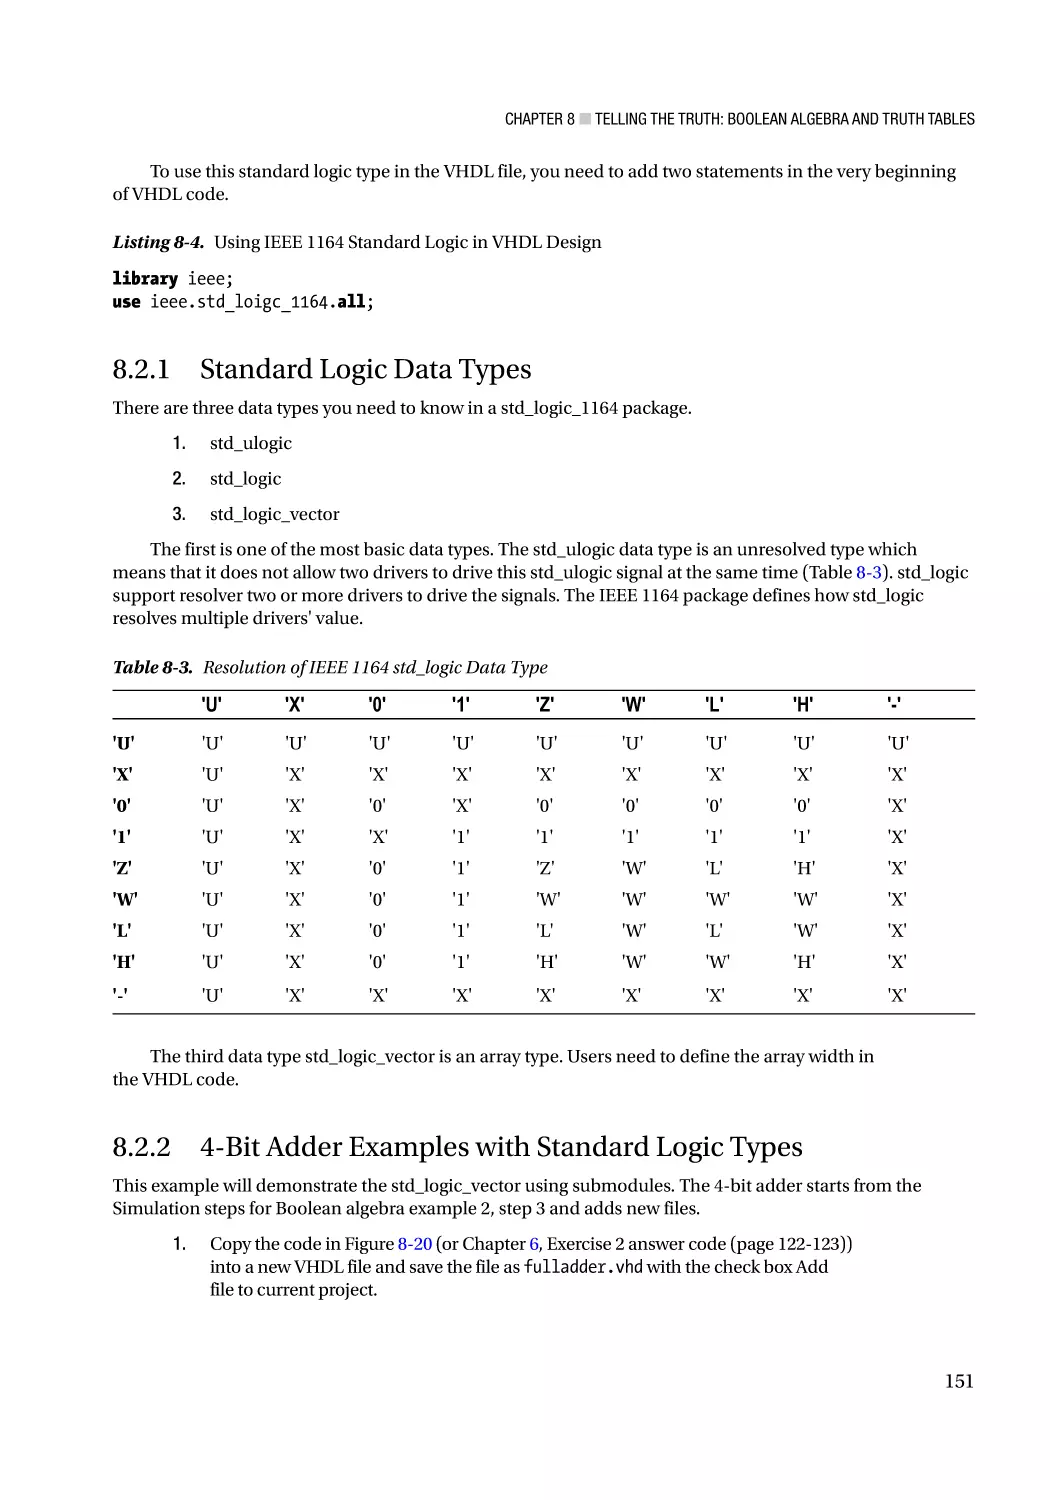 8.2.1 Standard Logic Data Types
8.2.2 4-Bit Adder Examples with Standard Logic Types